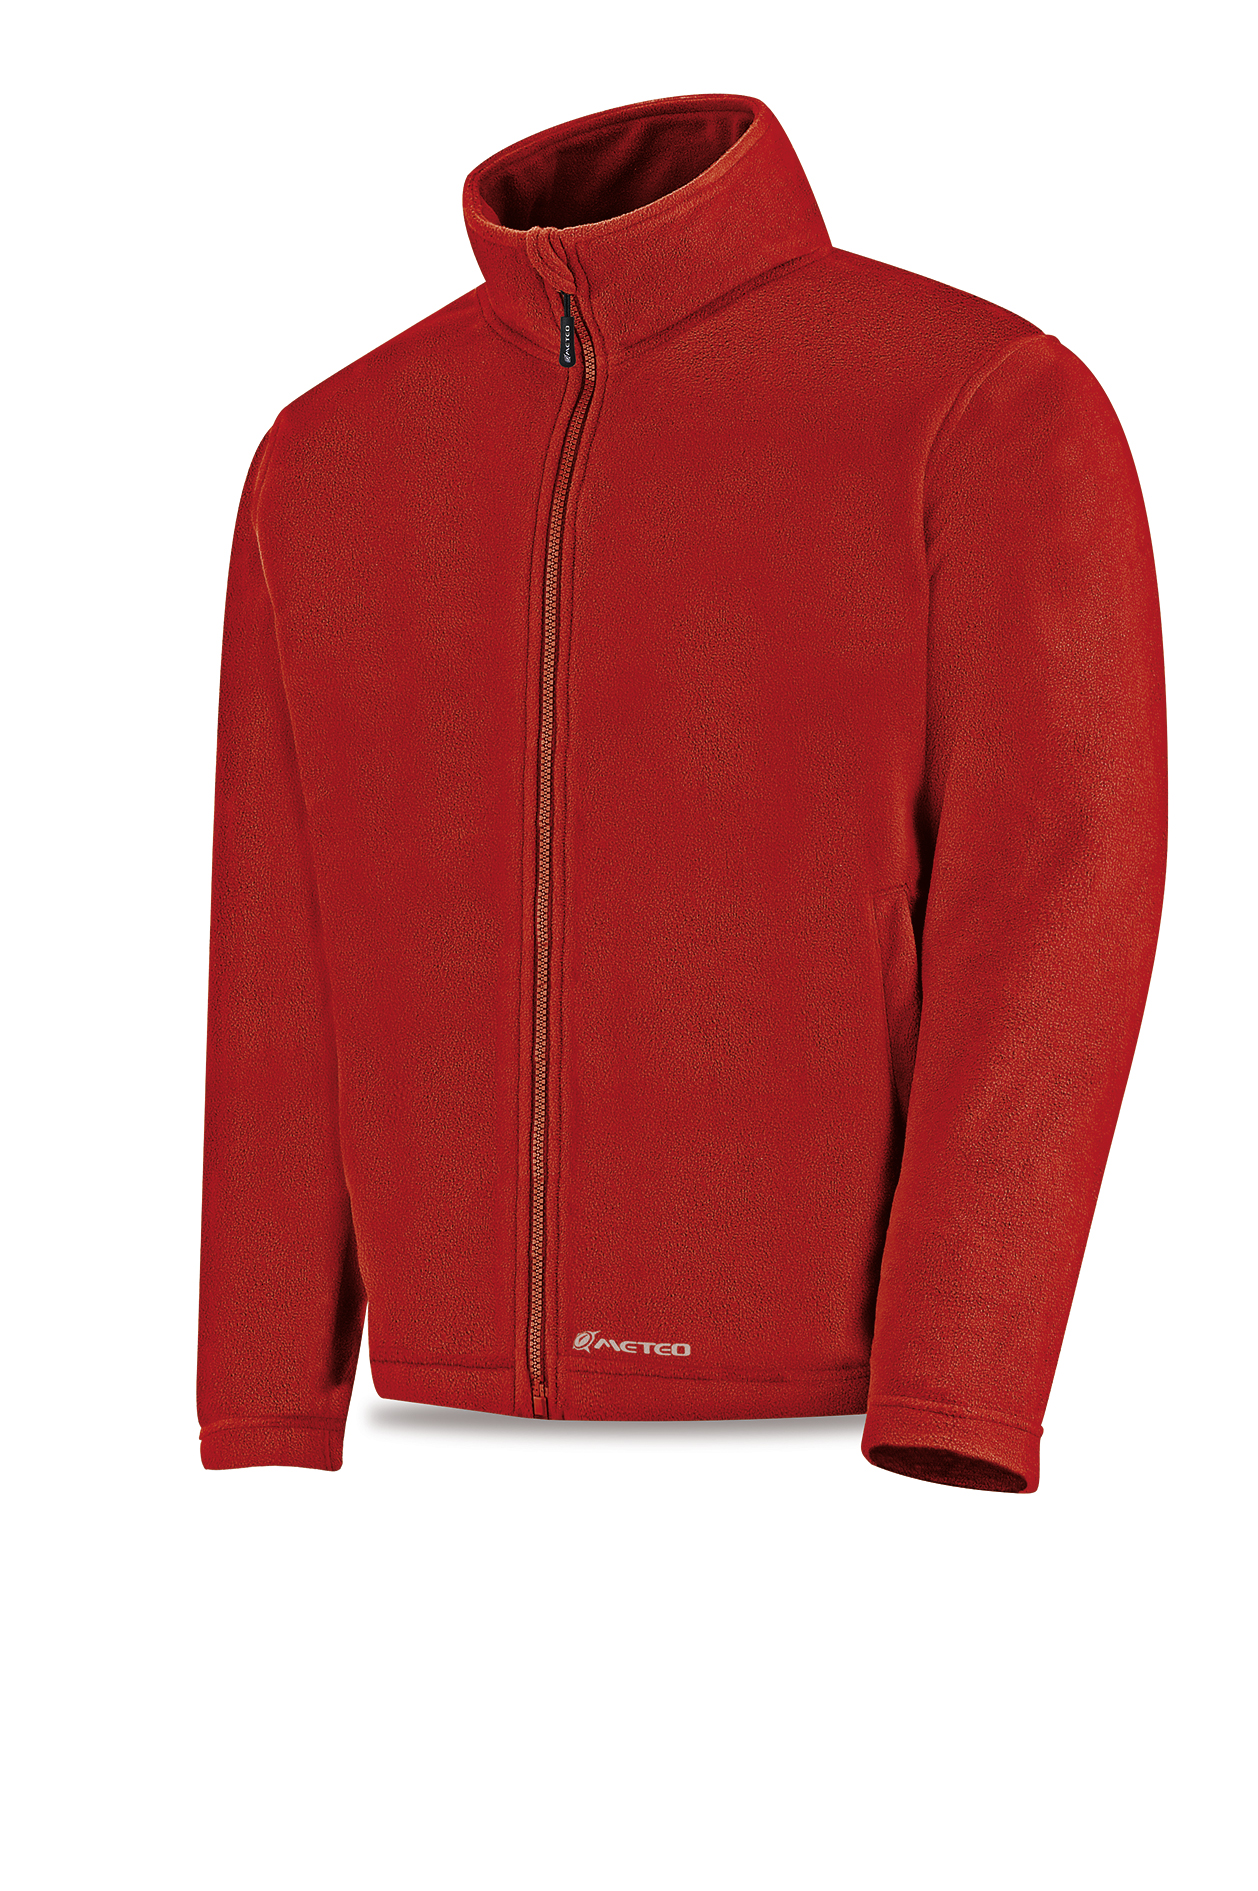 288-CHPR Coats and Rain Gear Solar Jackets QUETZAL model fleece jacket. Red color.